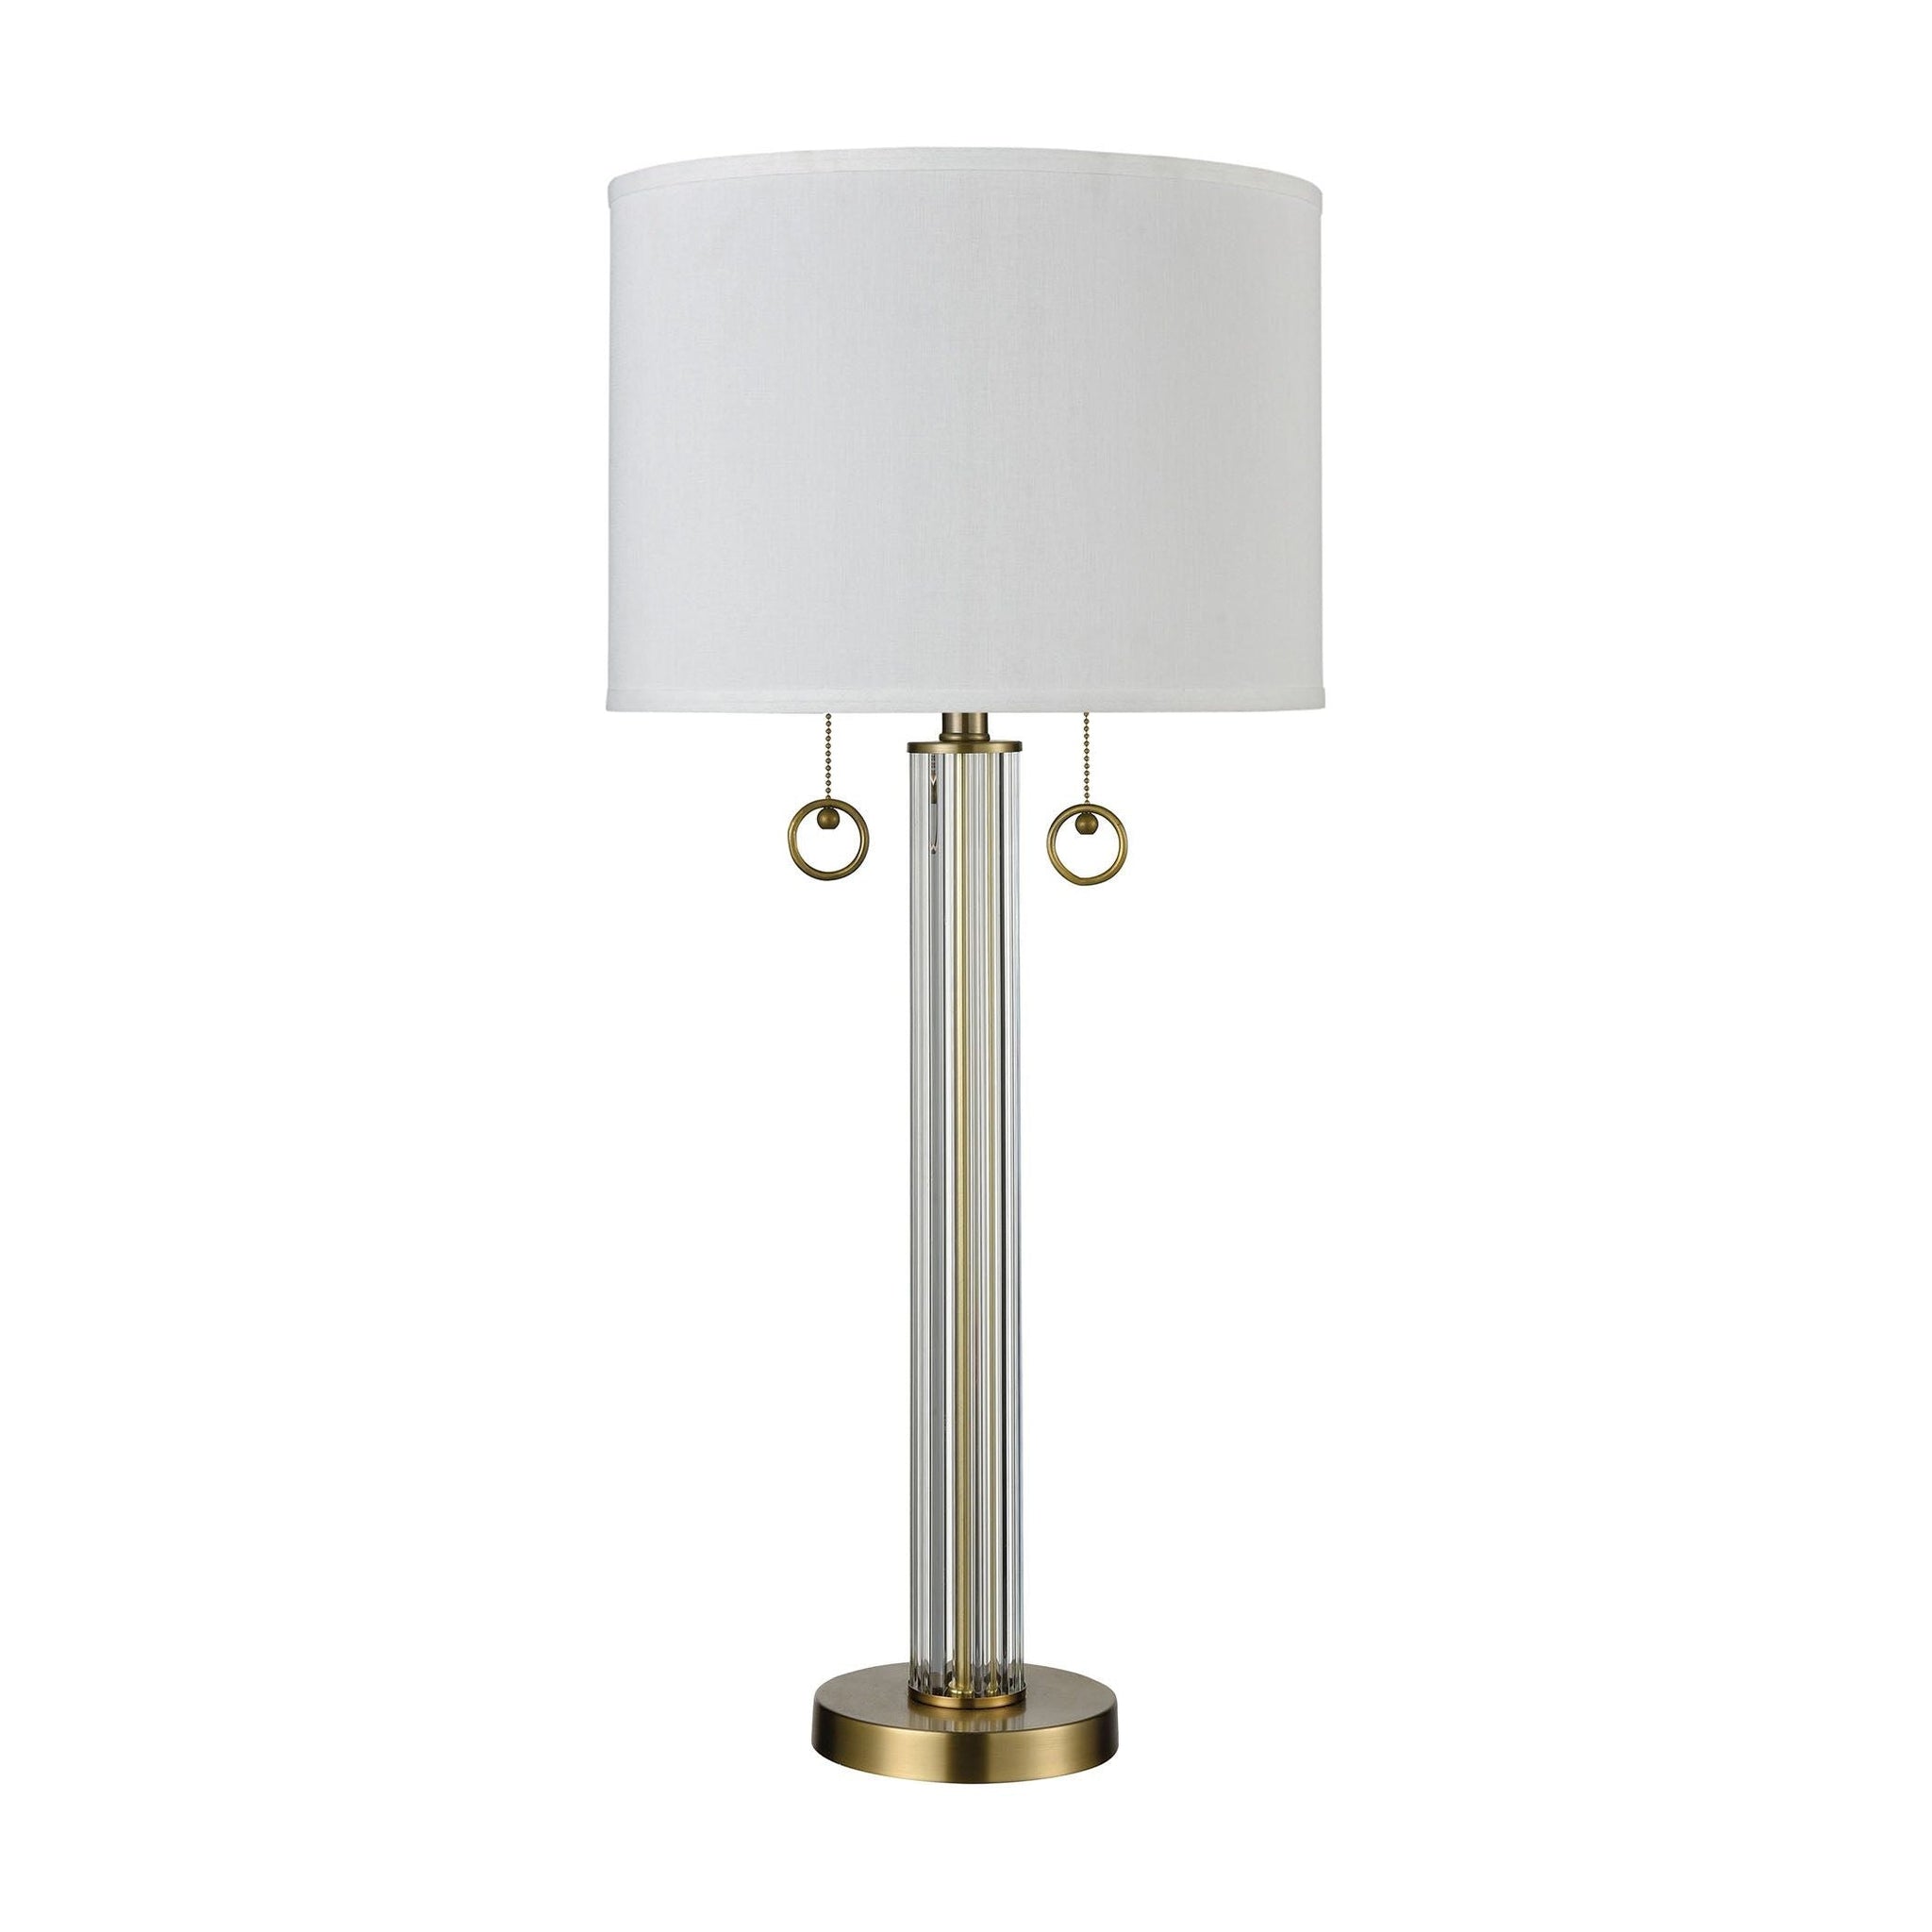 Cannery Row 34" High 2-Light Table Lamp